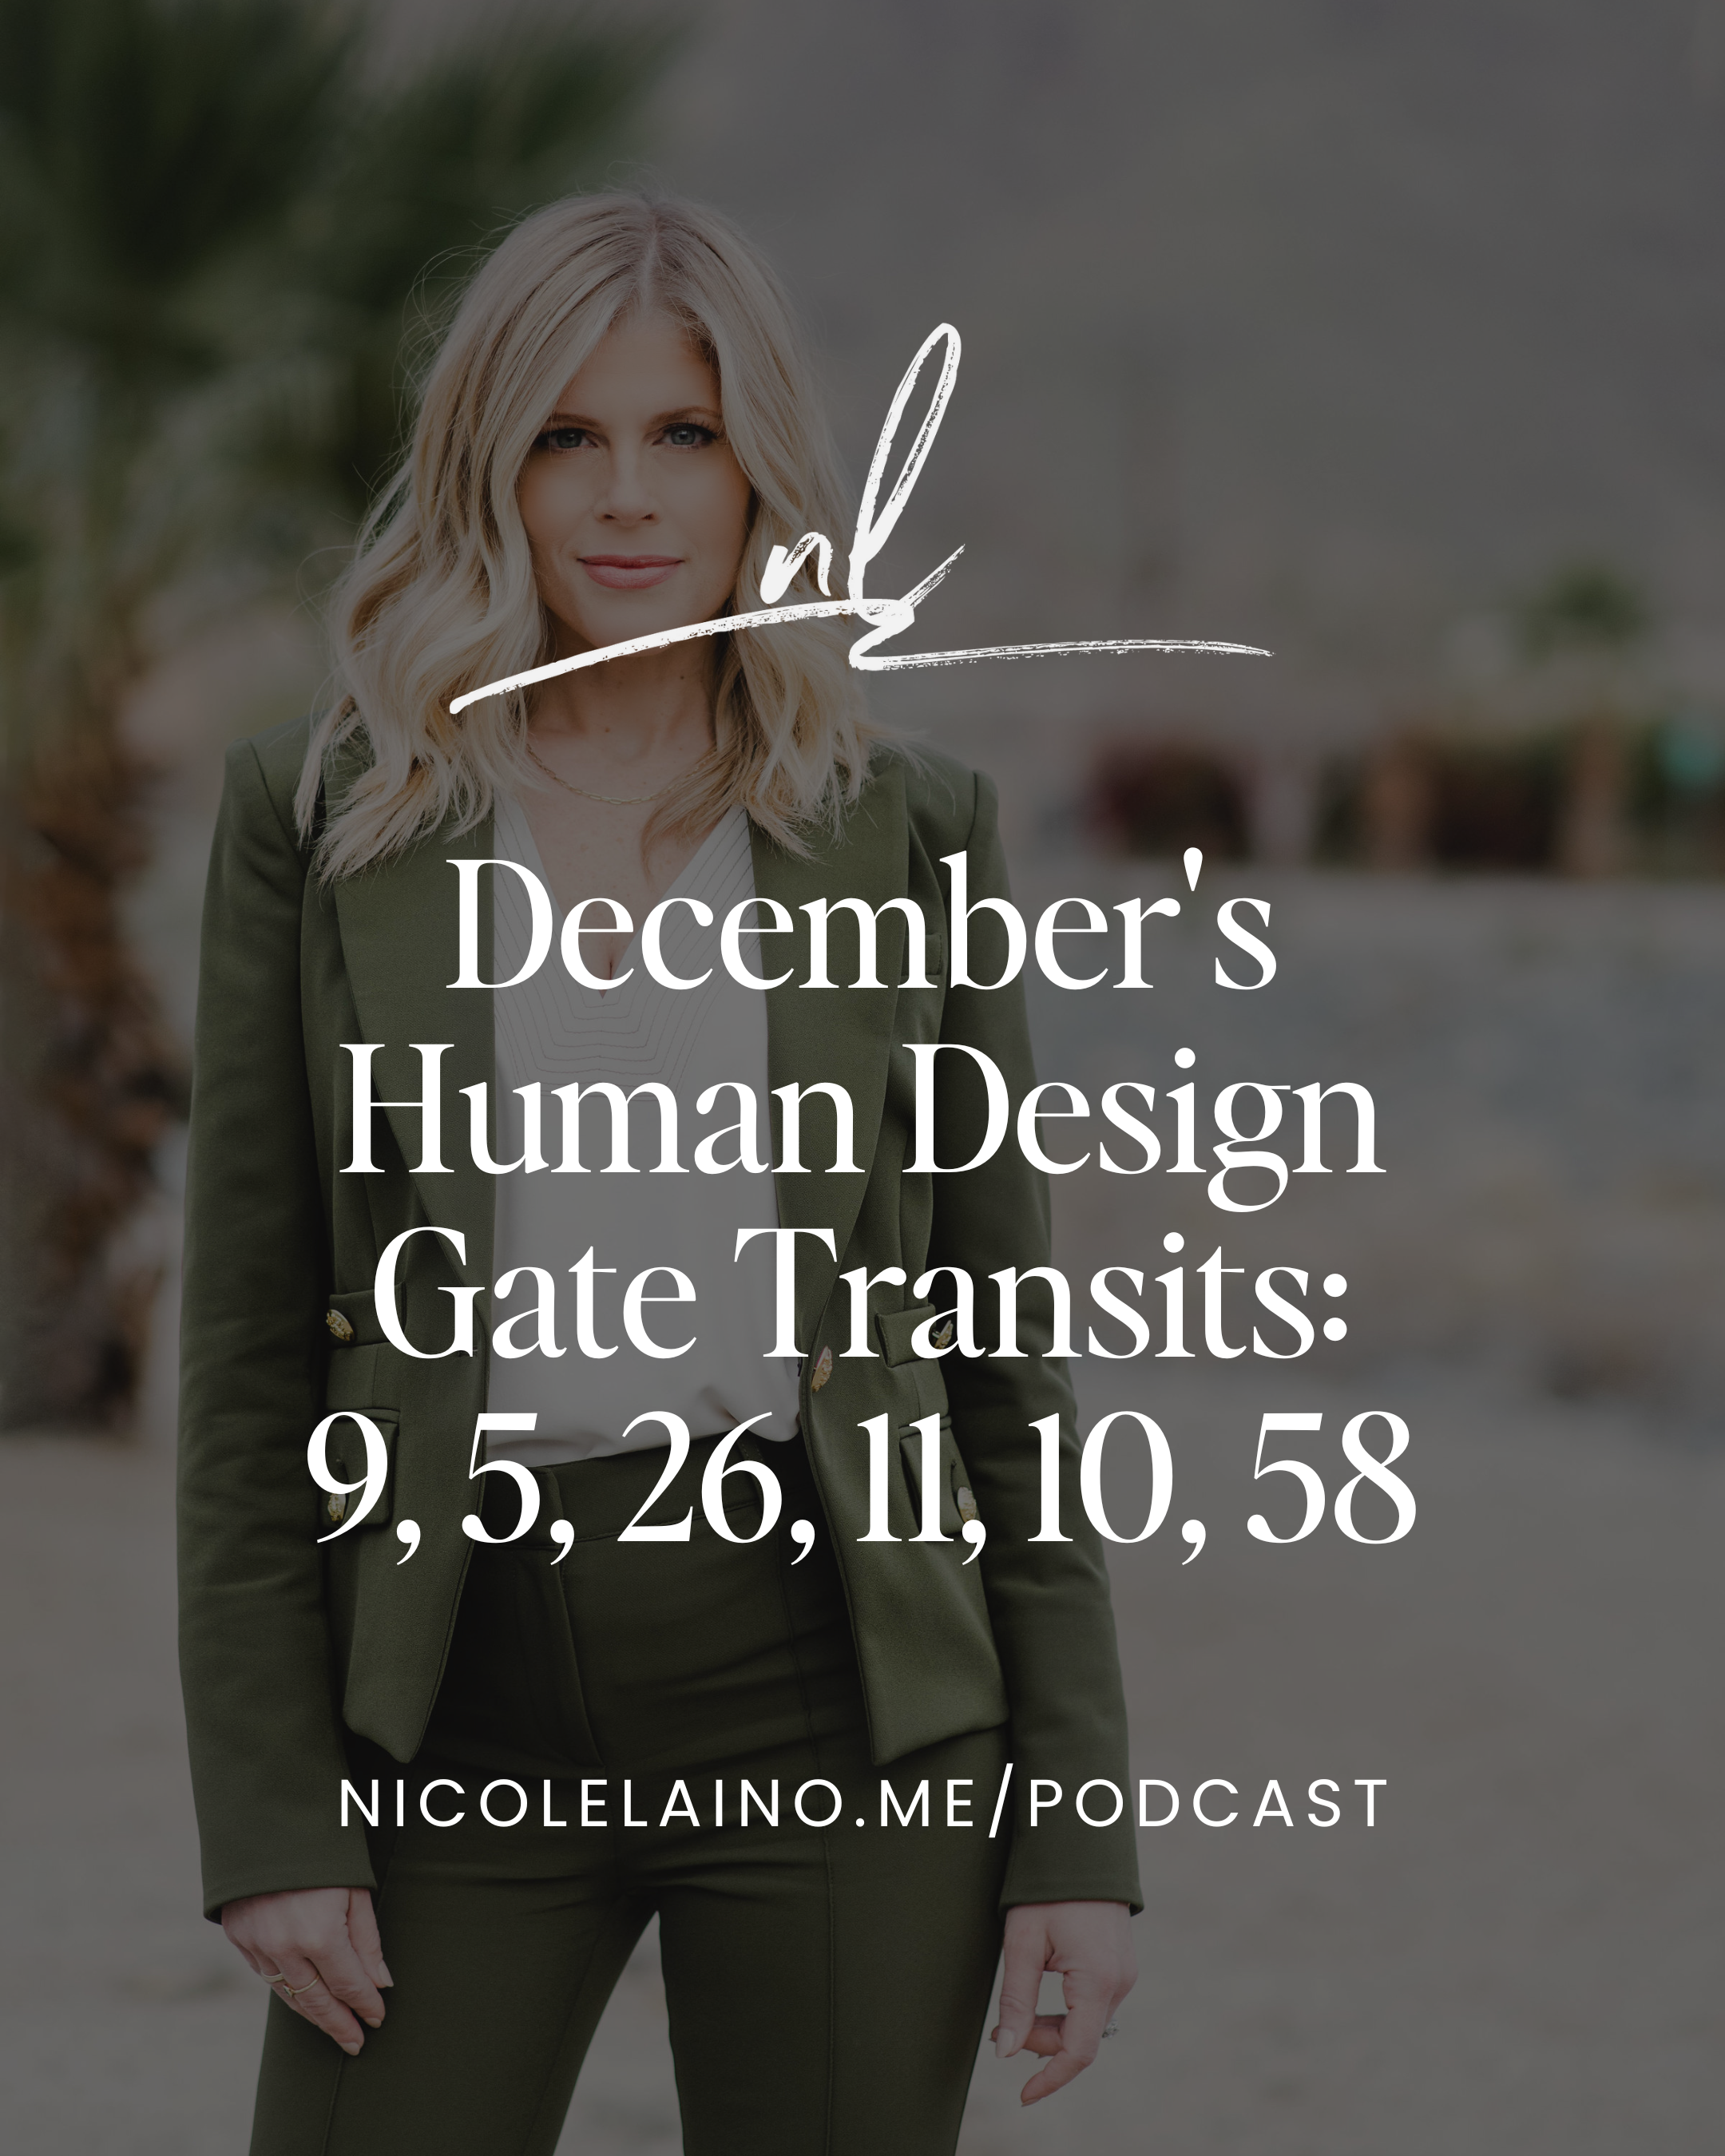 December's Human Design Gate Transits: 9, 5, 26, 11, 10, 58